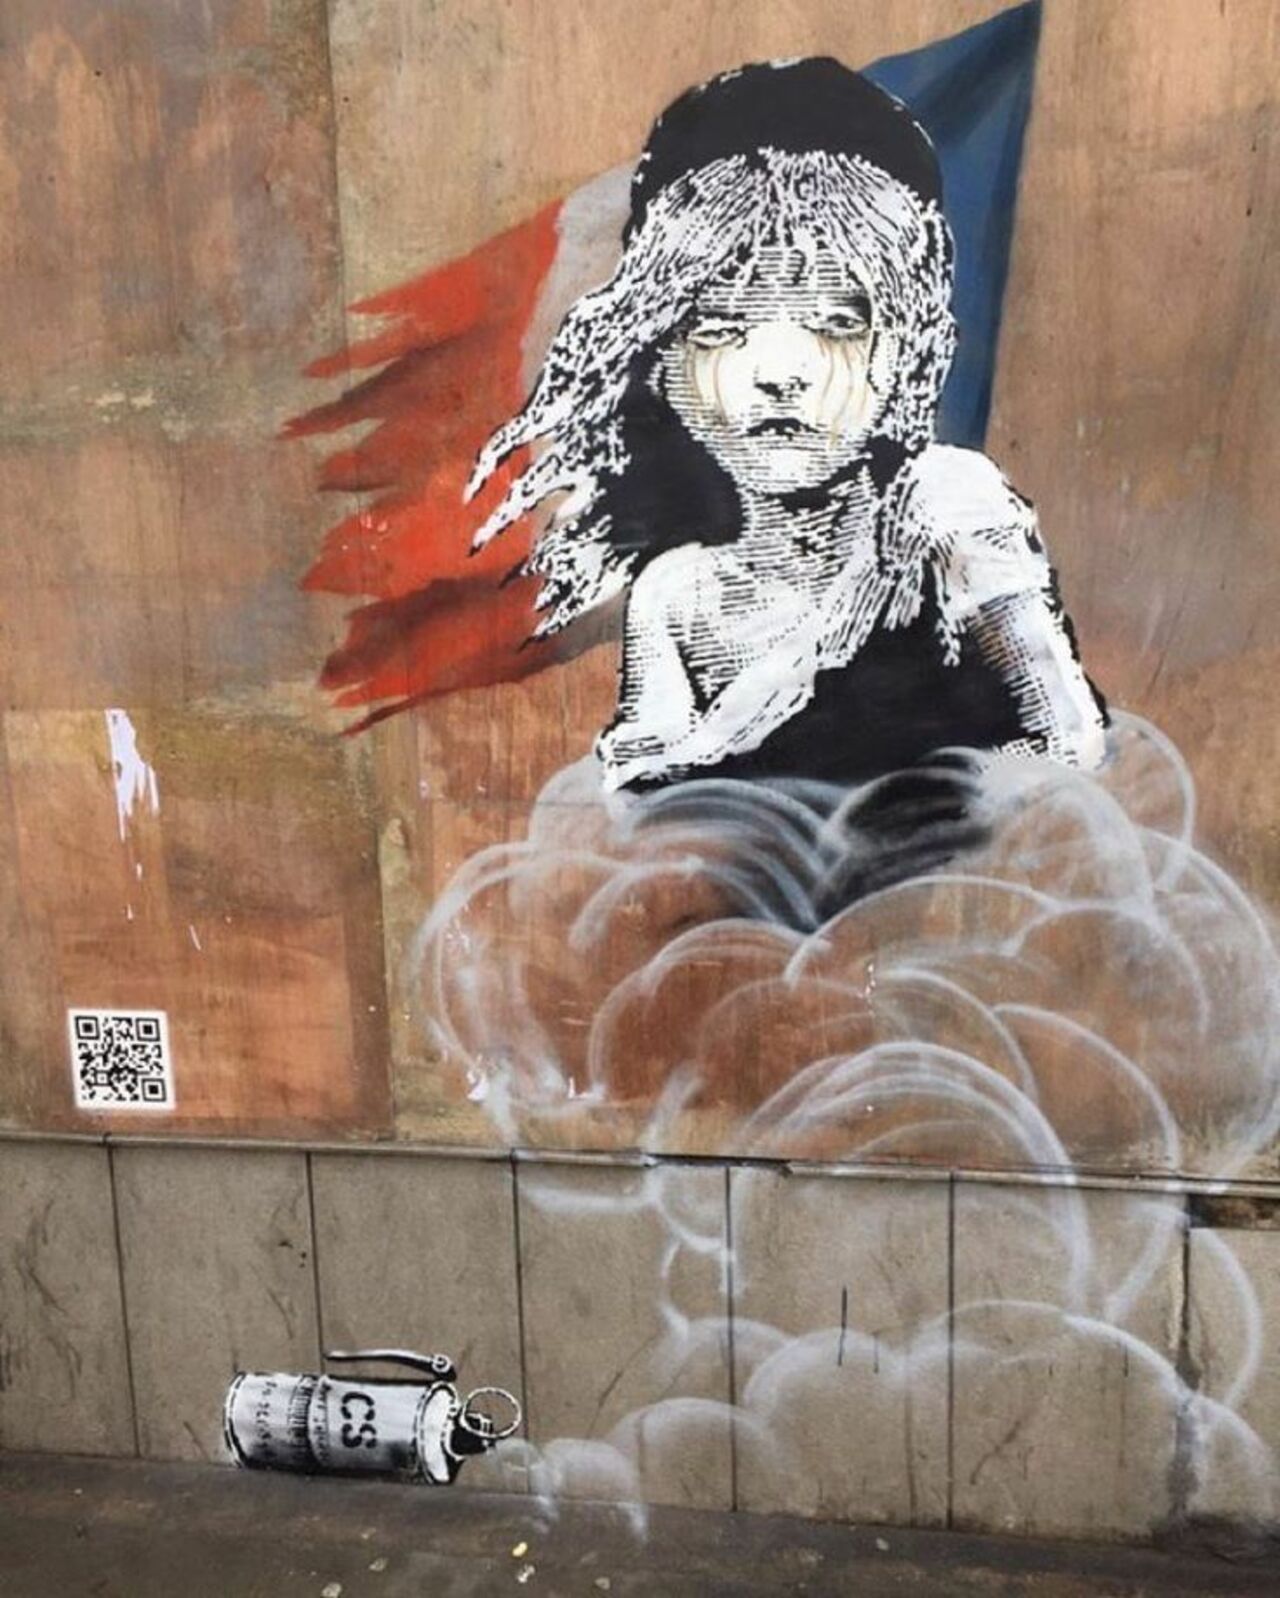 Banksy#streetart #mural #art #graffiti https://t.co/TfYinxGUXy